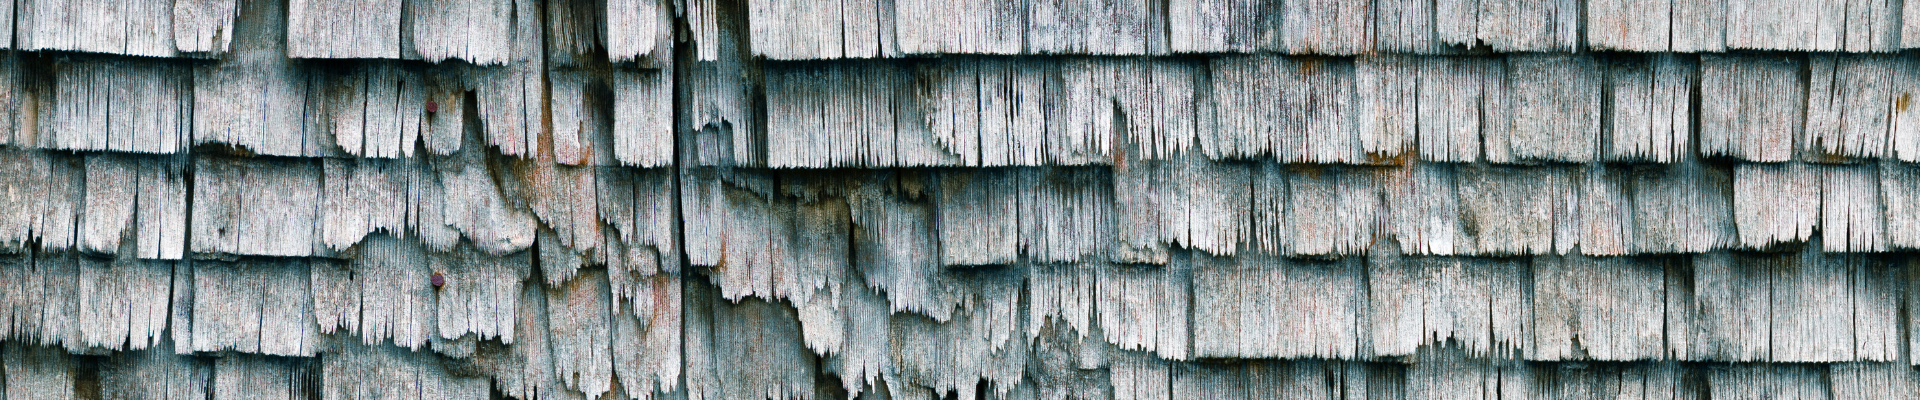 wood-texture-banner_1920x400